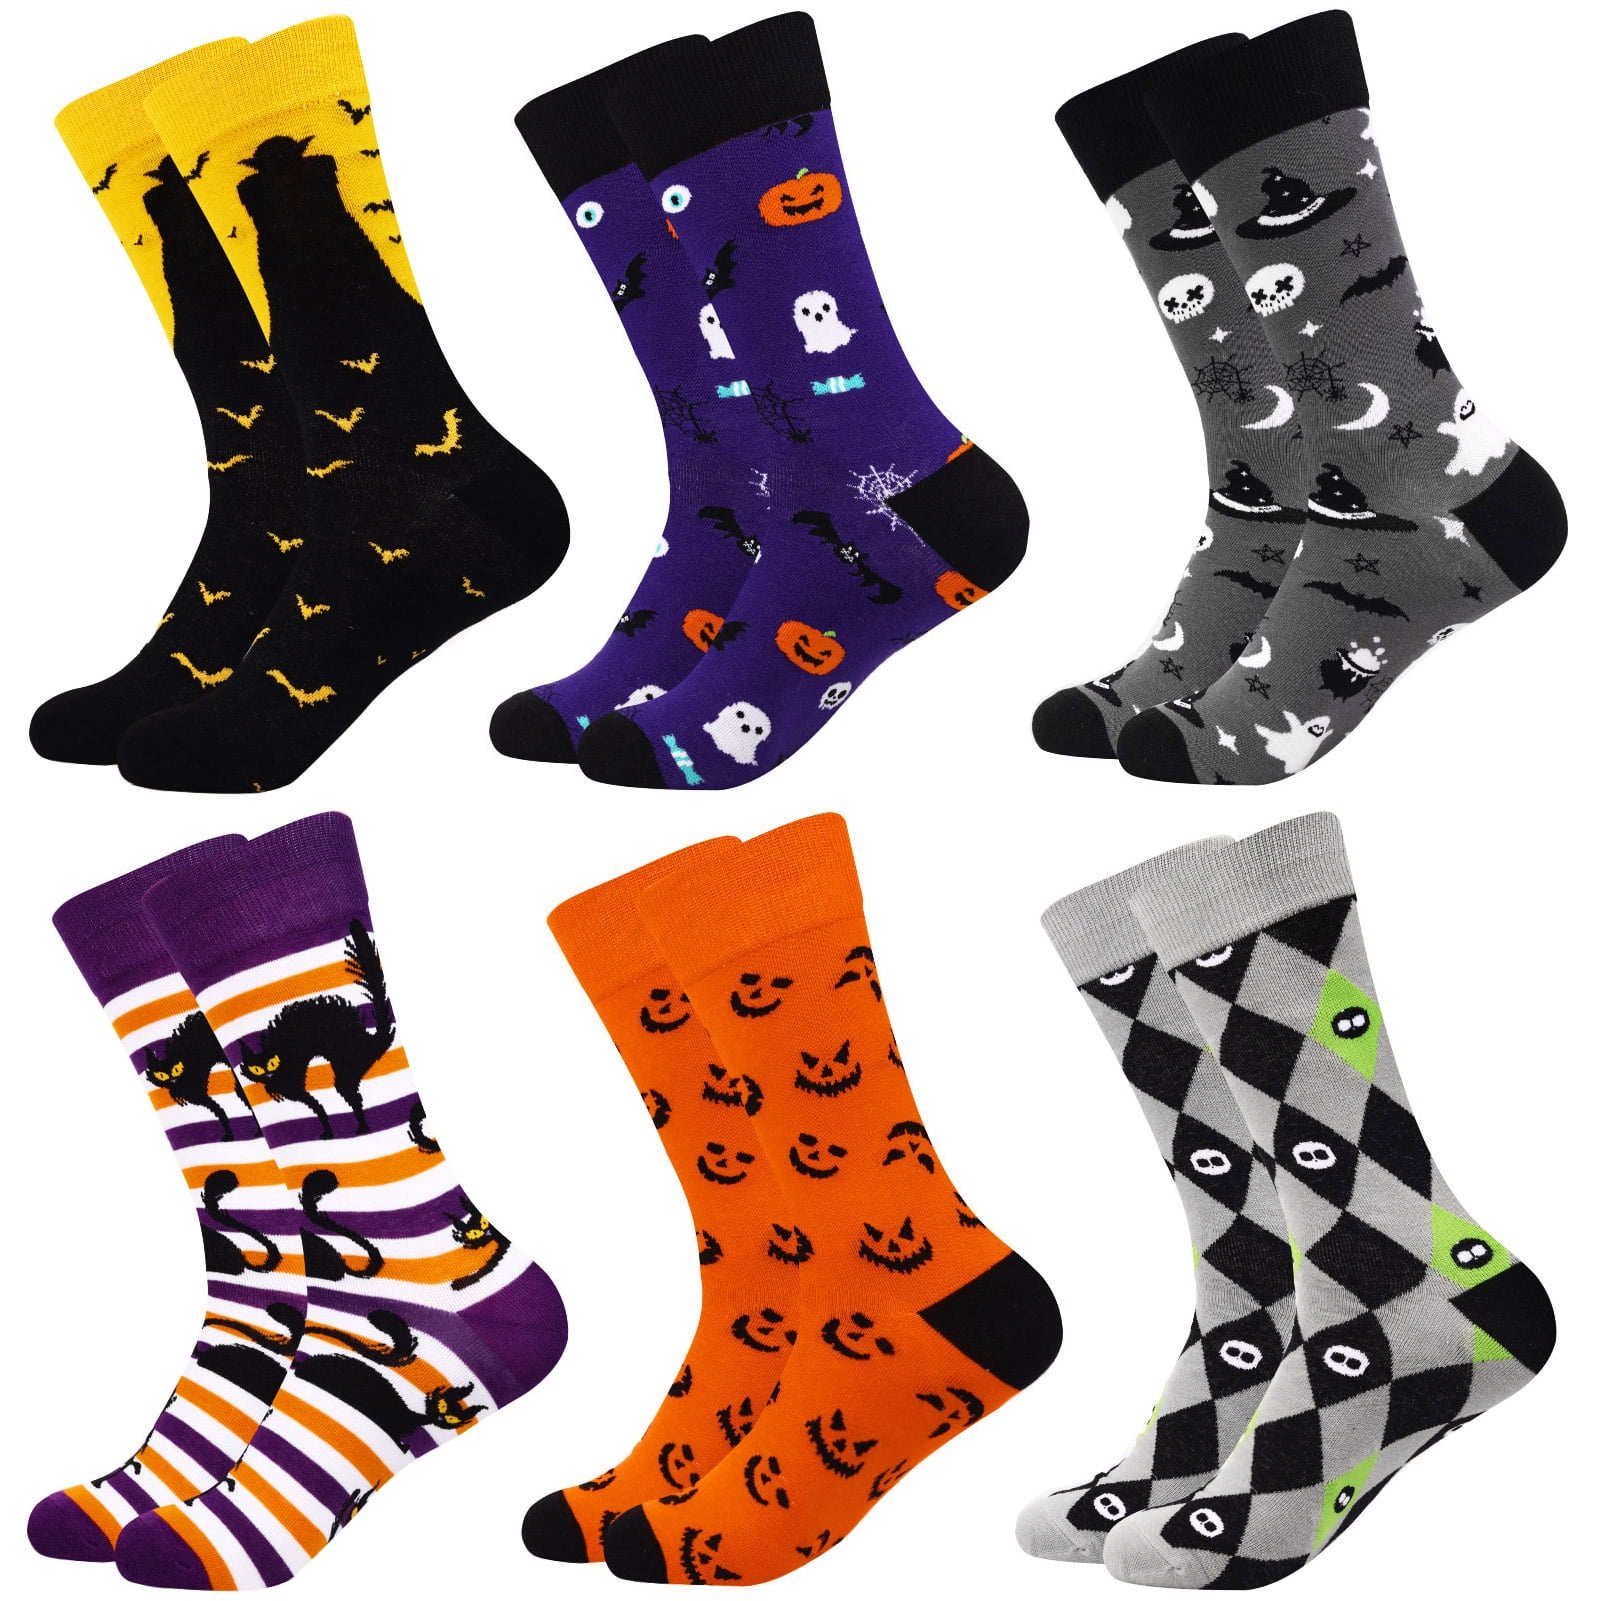 Funny Halloween Socks for Men Fun Crazy Crew Dress Socks 6 Pairs ...